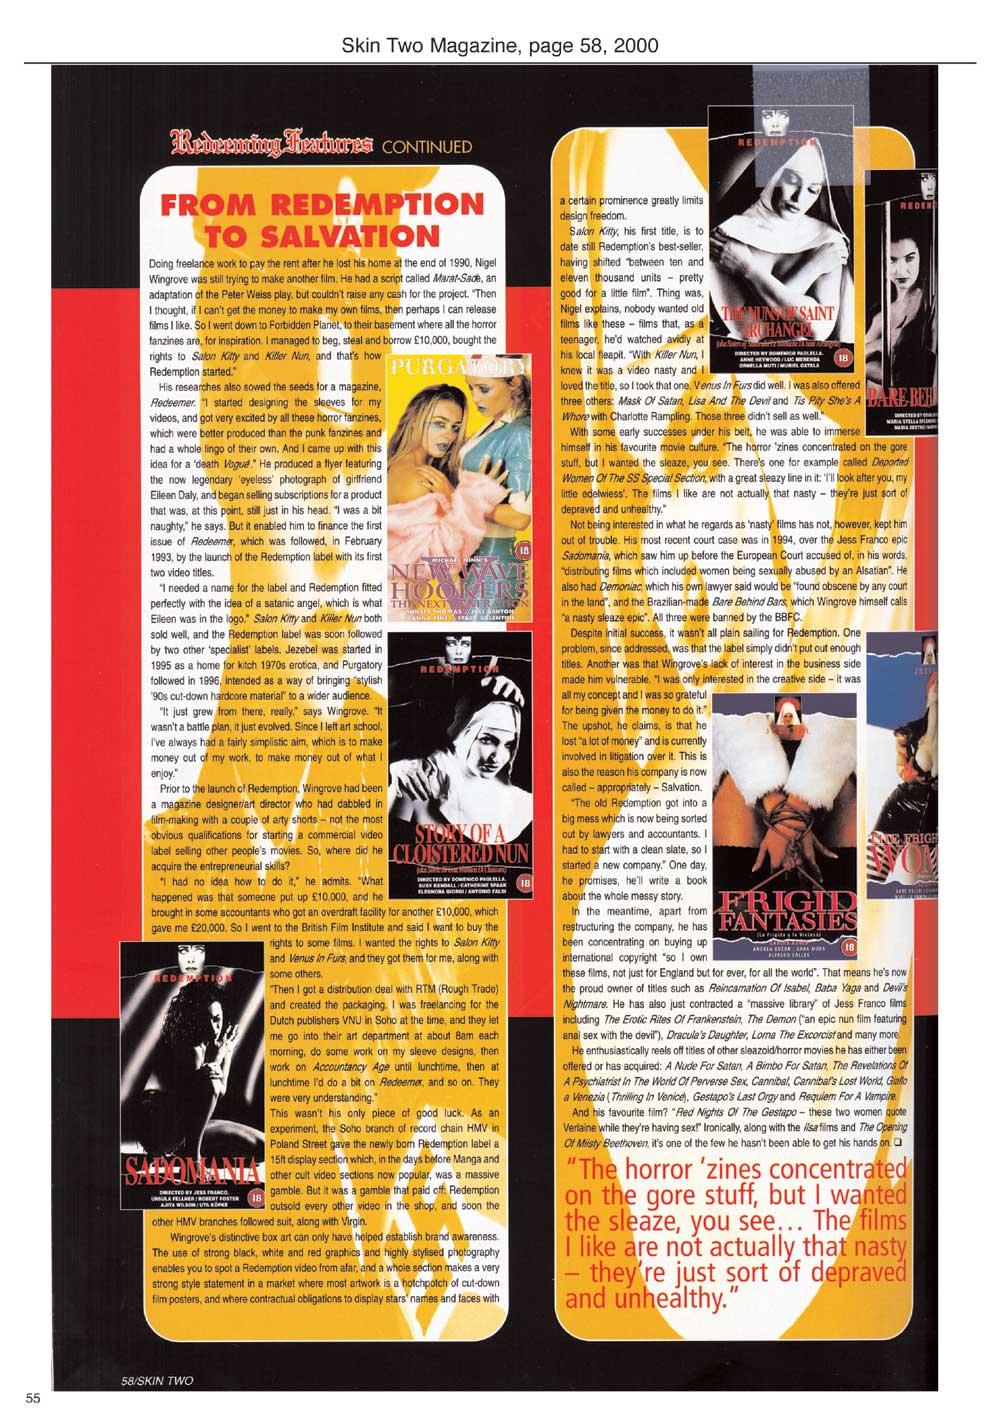 Skin Two Magazine 2000